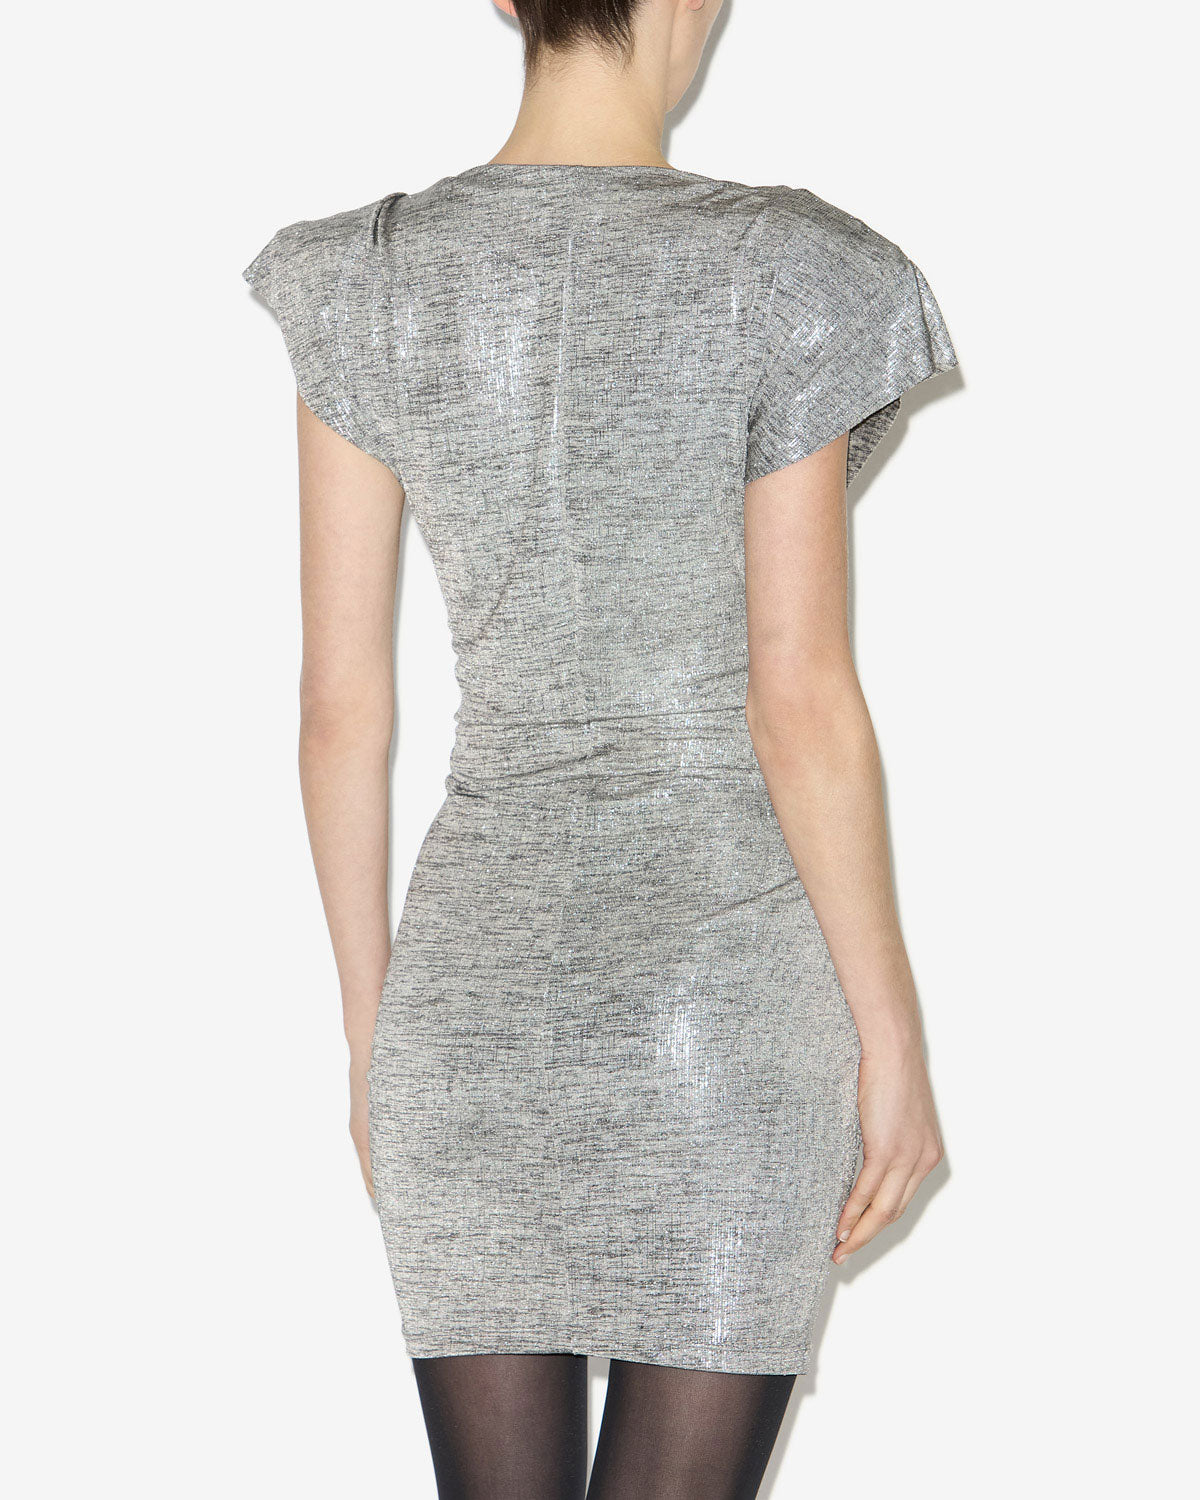 Nadilia dress Woman Gray-silver 3